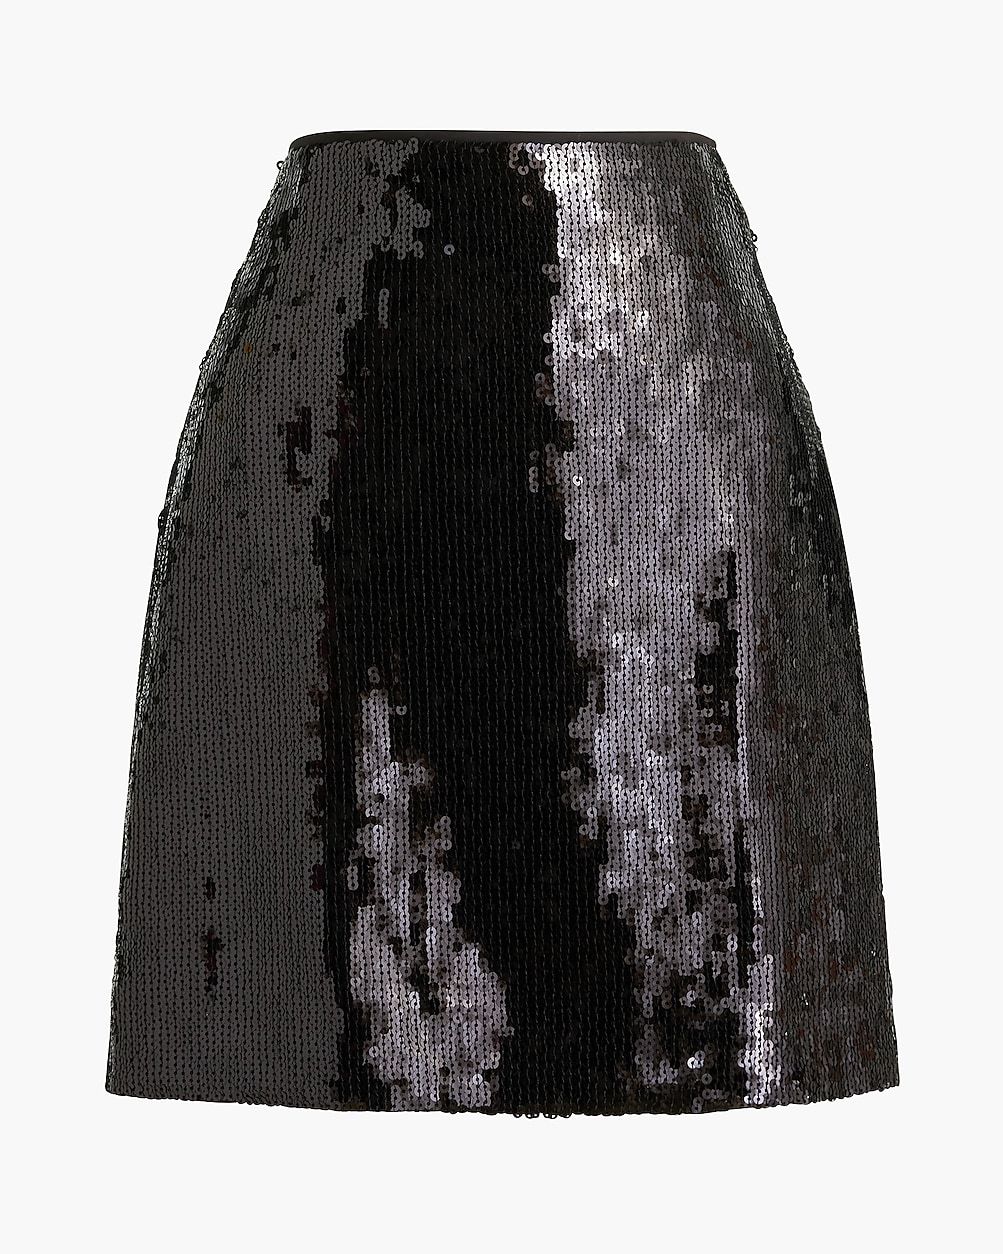 Sequin mini skirt | J.Crew Factory